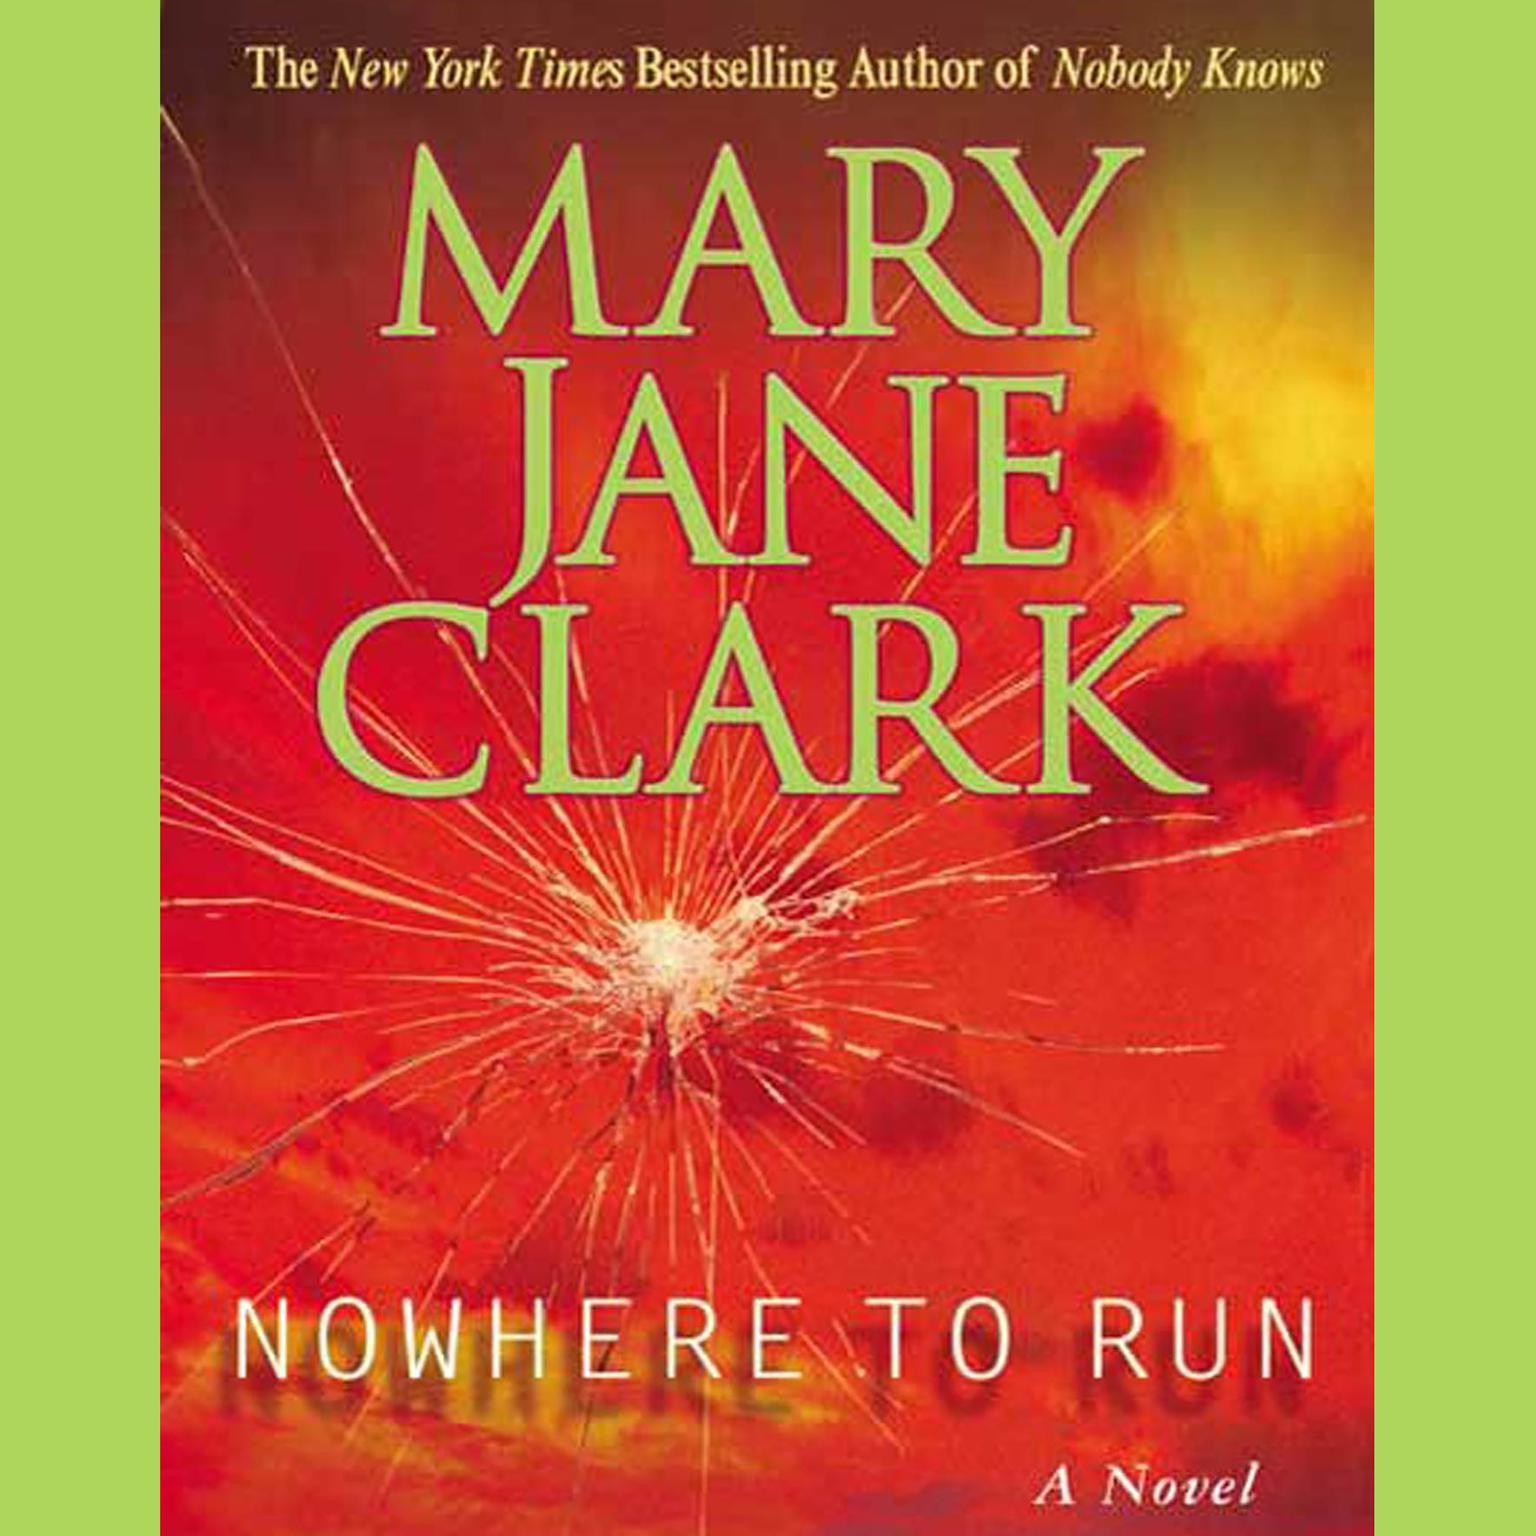 Nowhere to Run (Abridged): A Novel Audiobook, by Mary Jane Clark